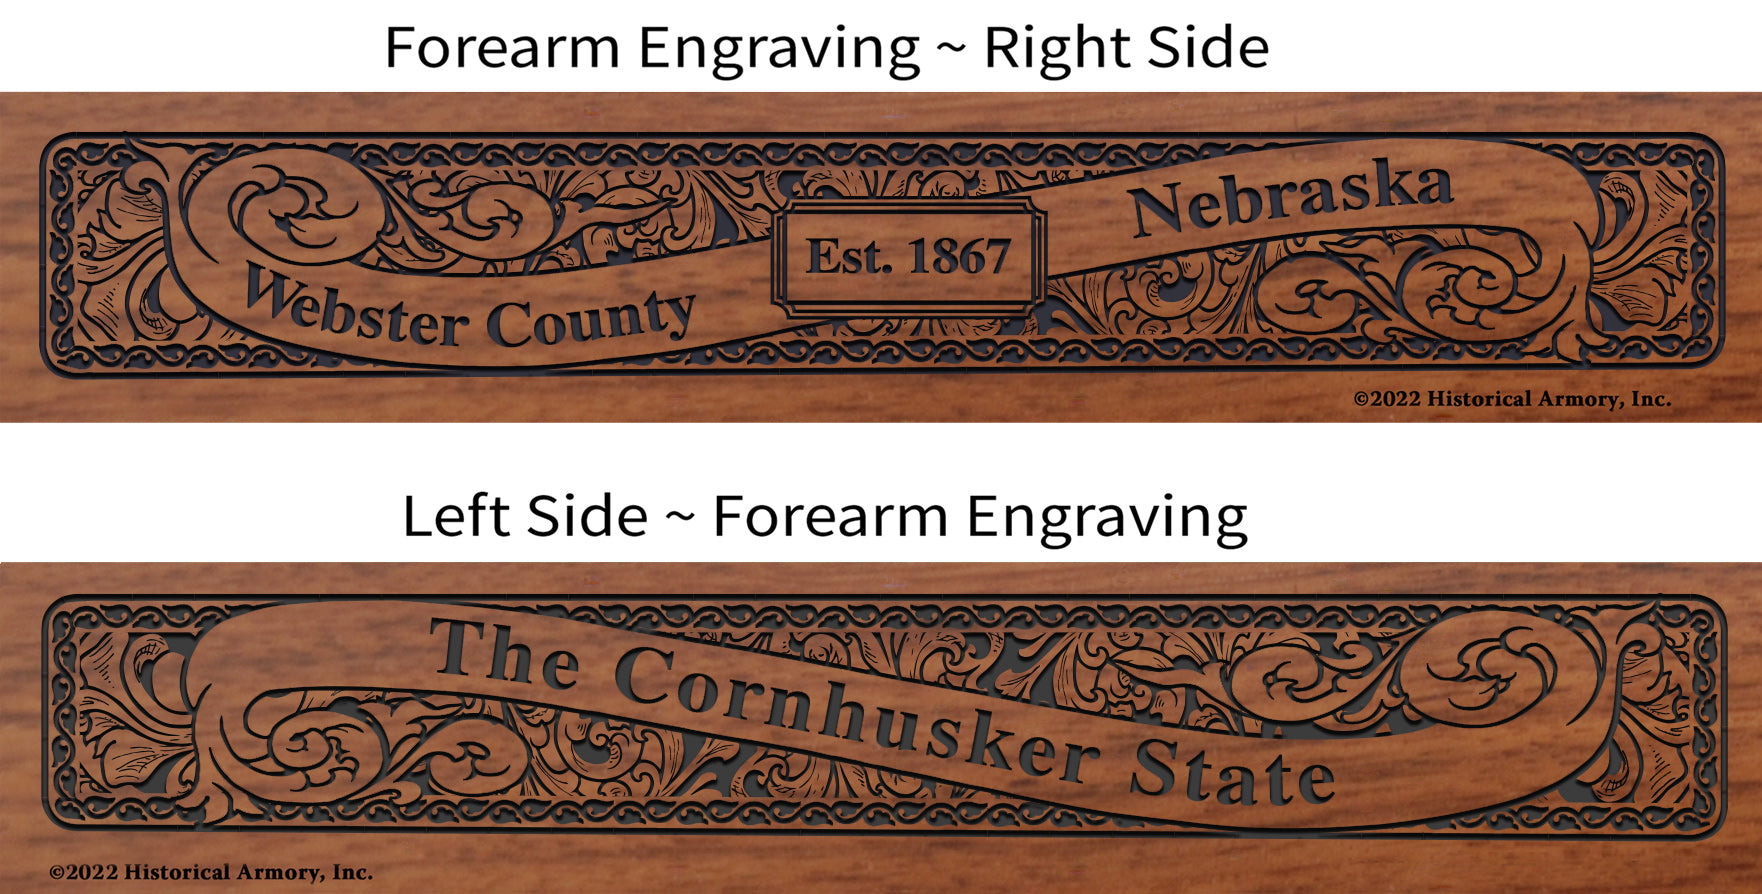 Webster County Nebraska Engraved Rifle Forearm